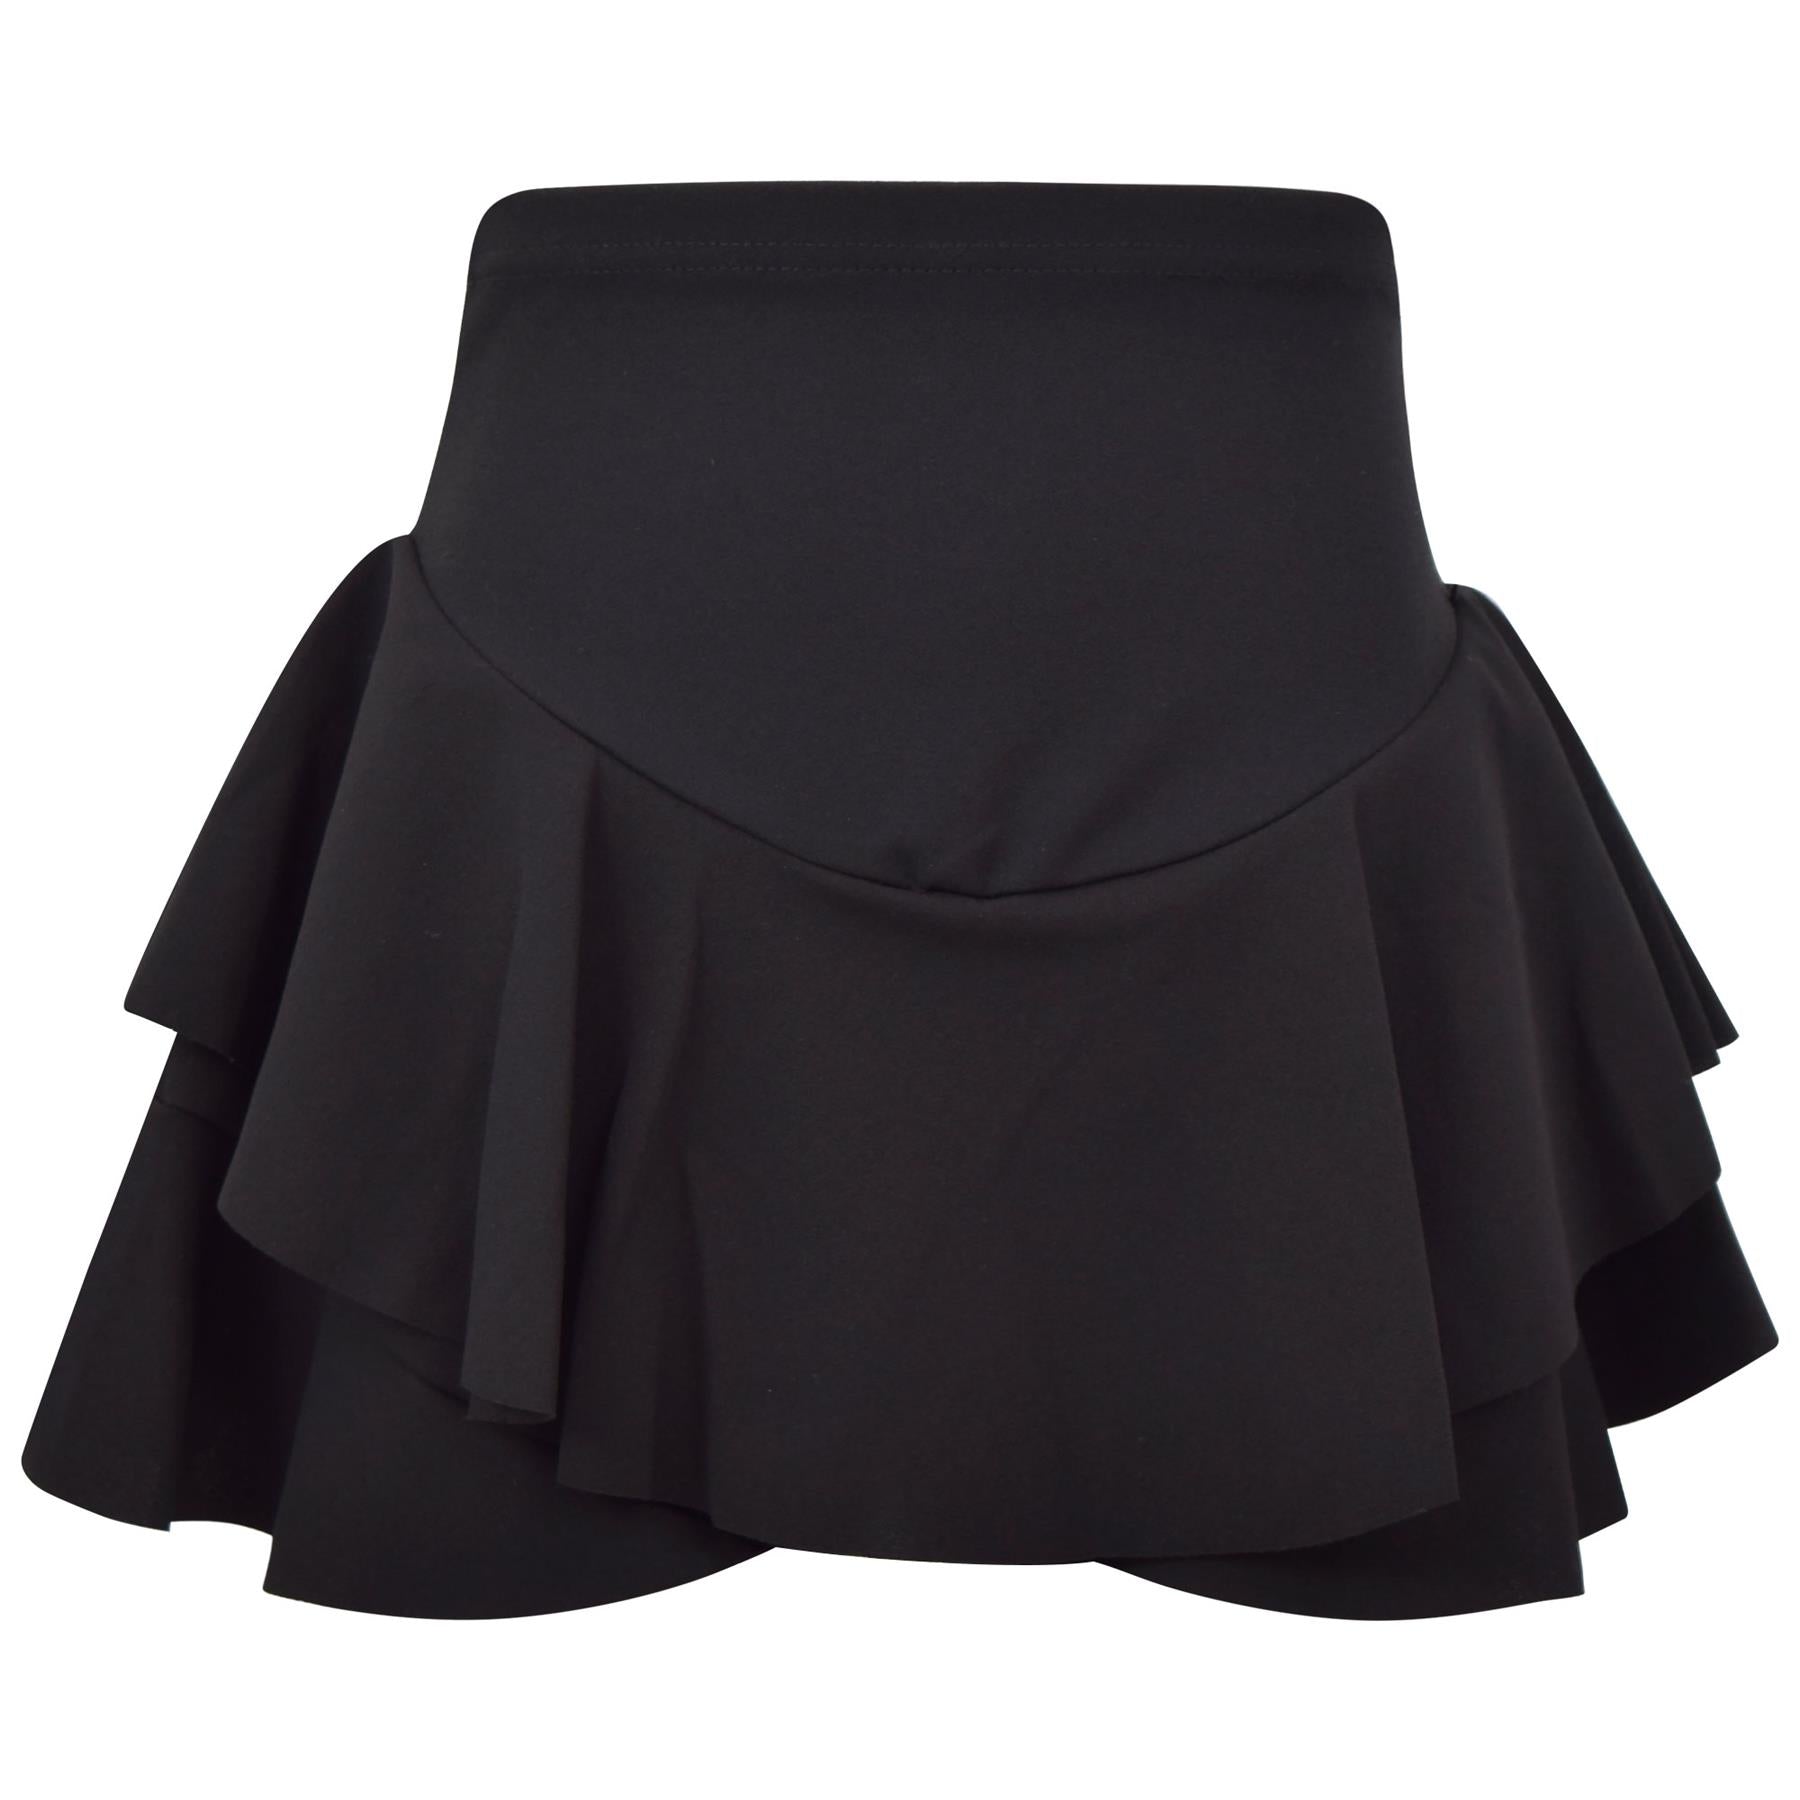 A2Z 4 Kids Girls High Waisted Ruffle Mini Skirt Double Layered Short Party Dress